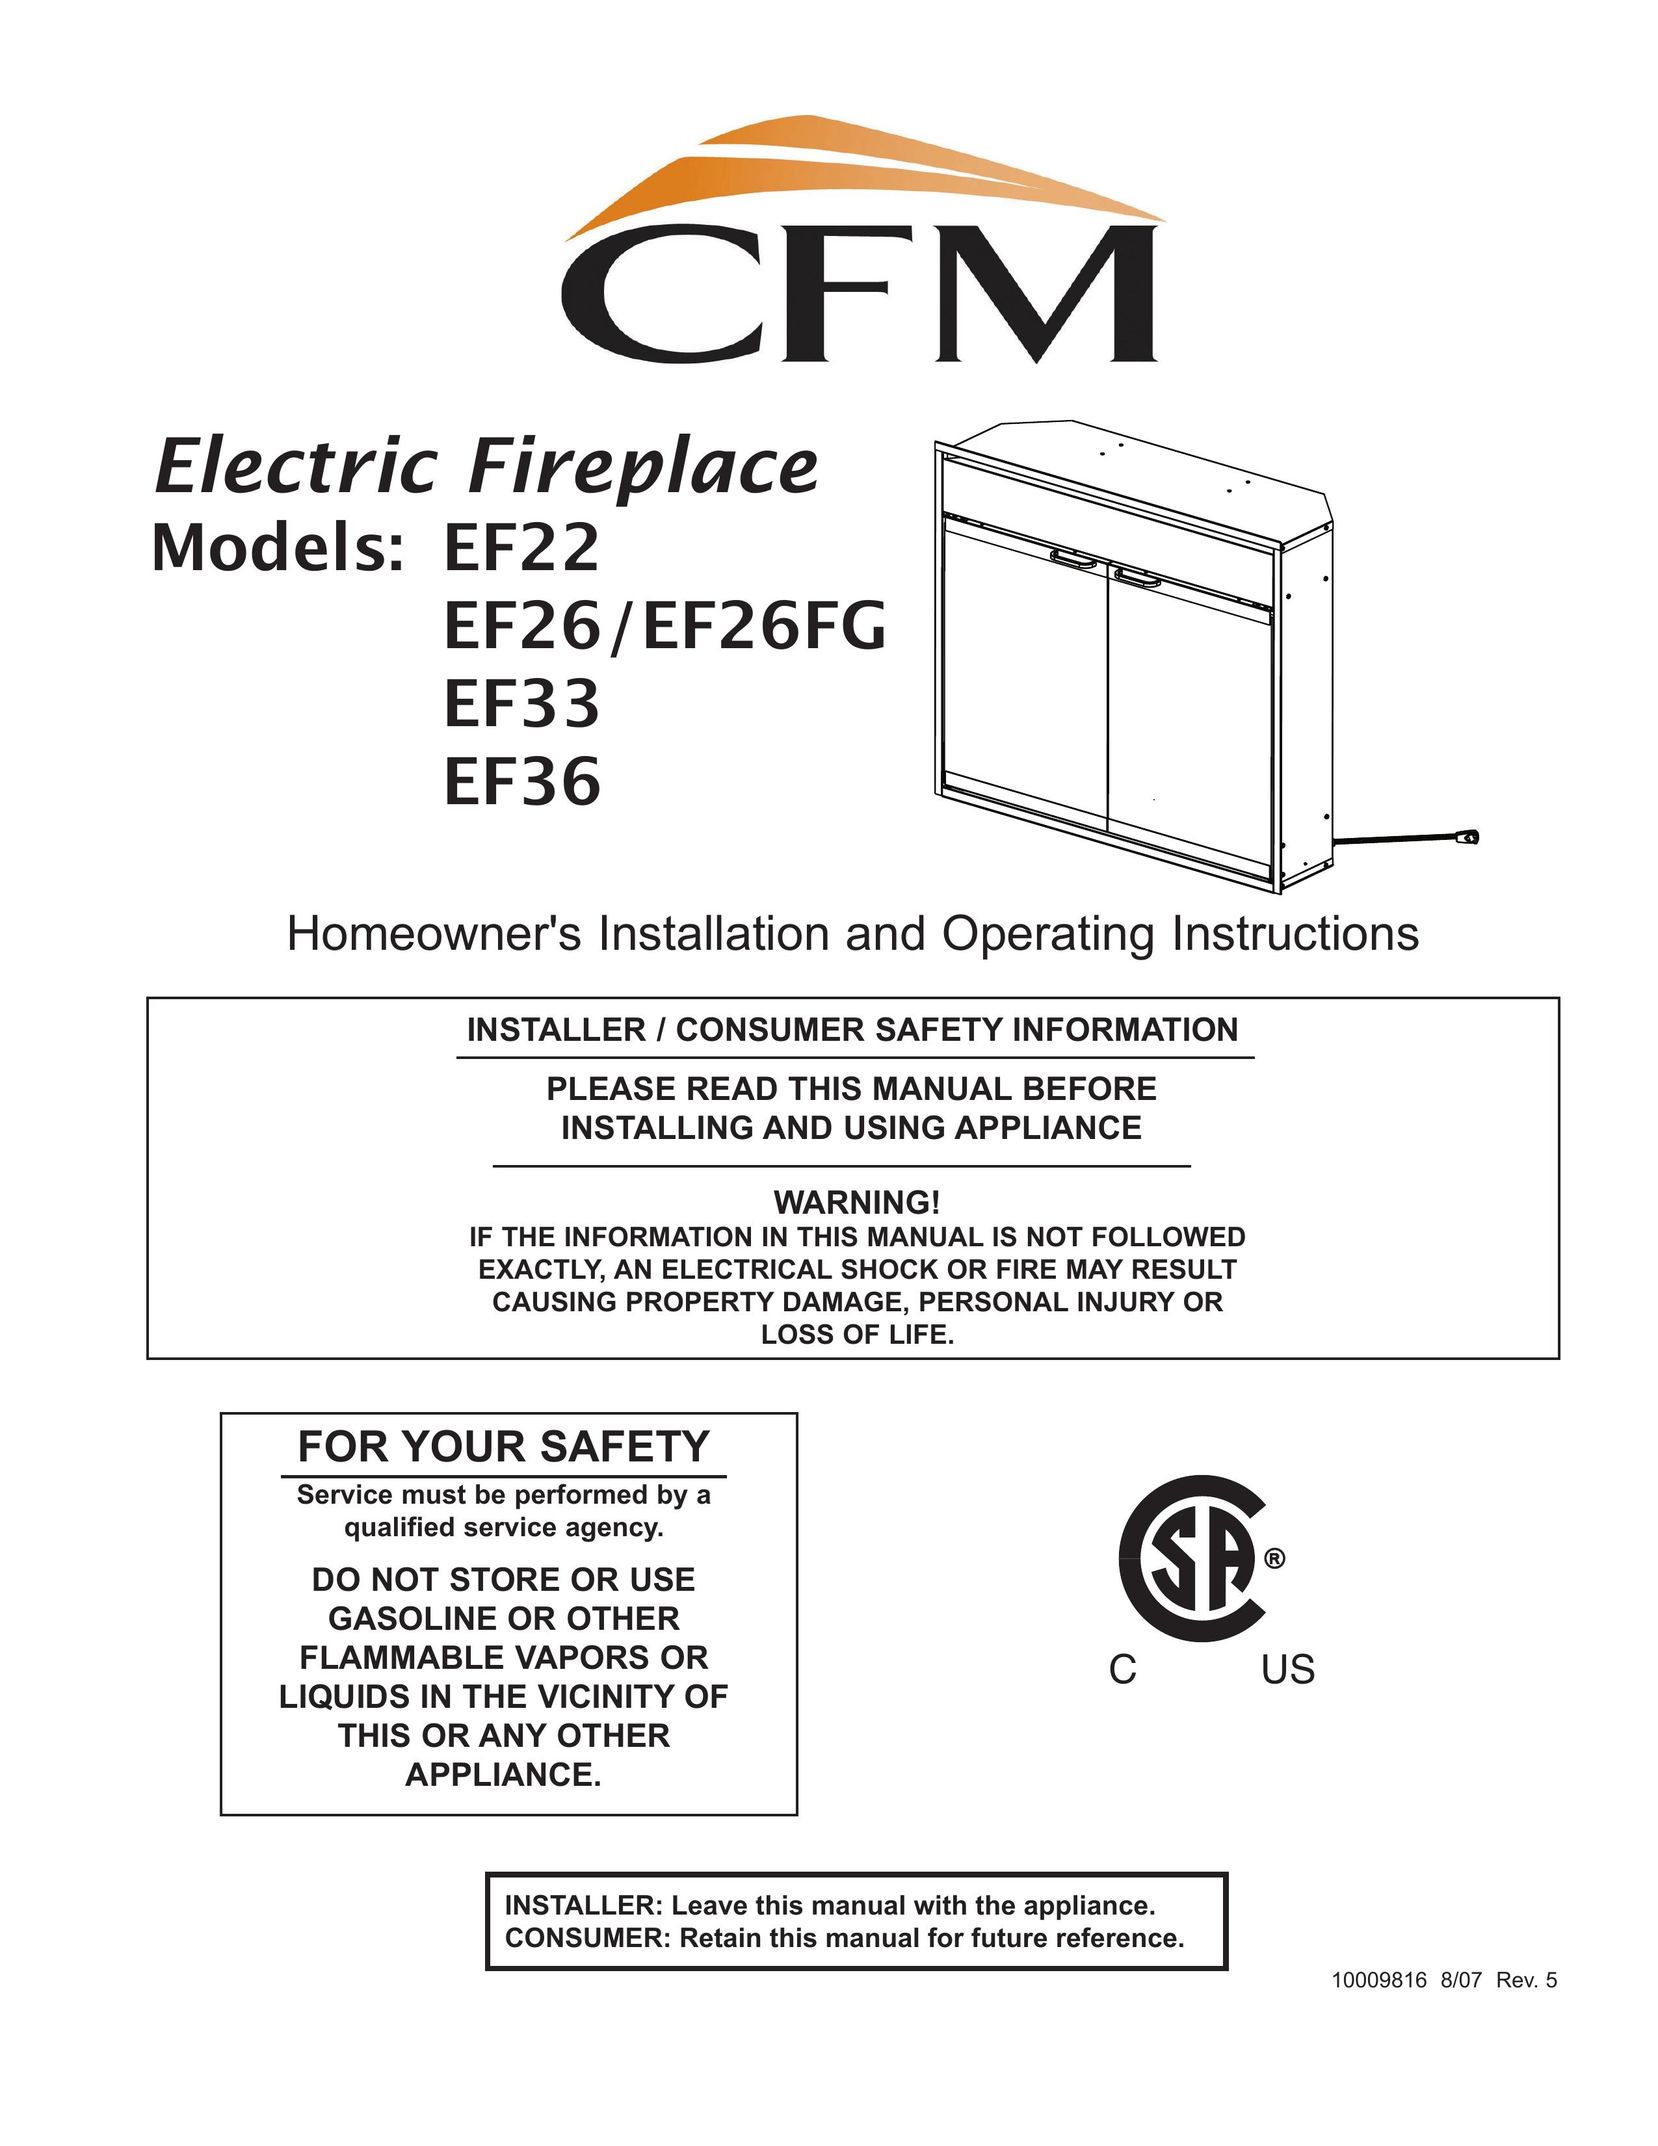 CFM Corporation EF36 Indoor Fireplace User Manual